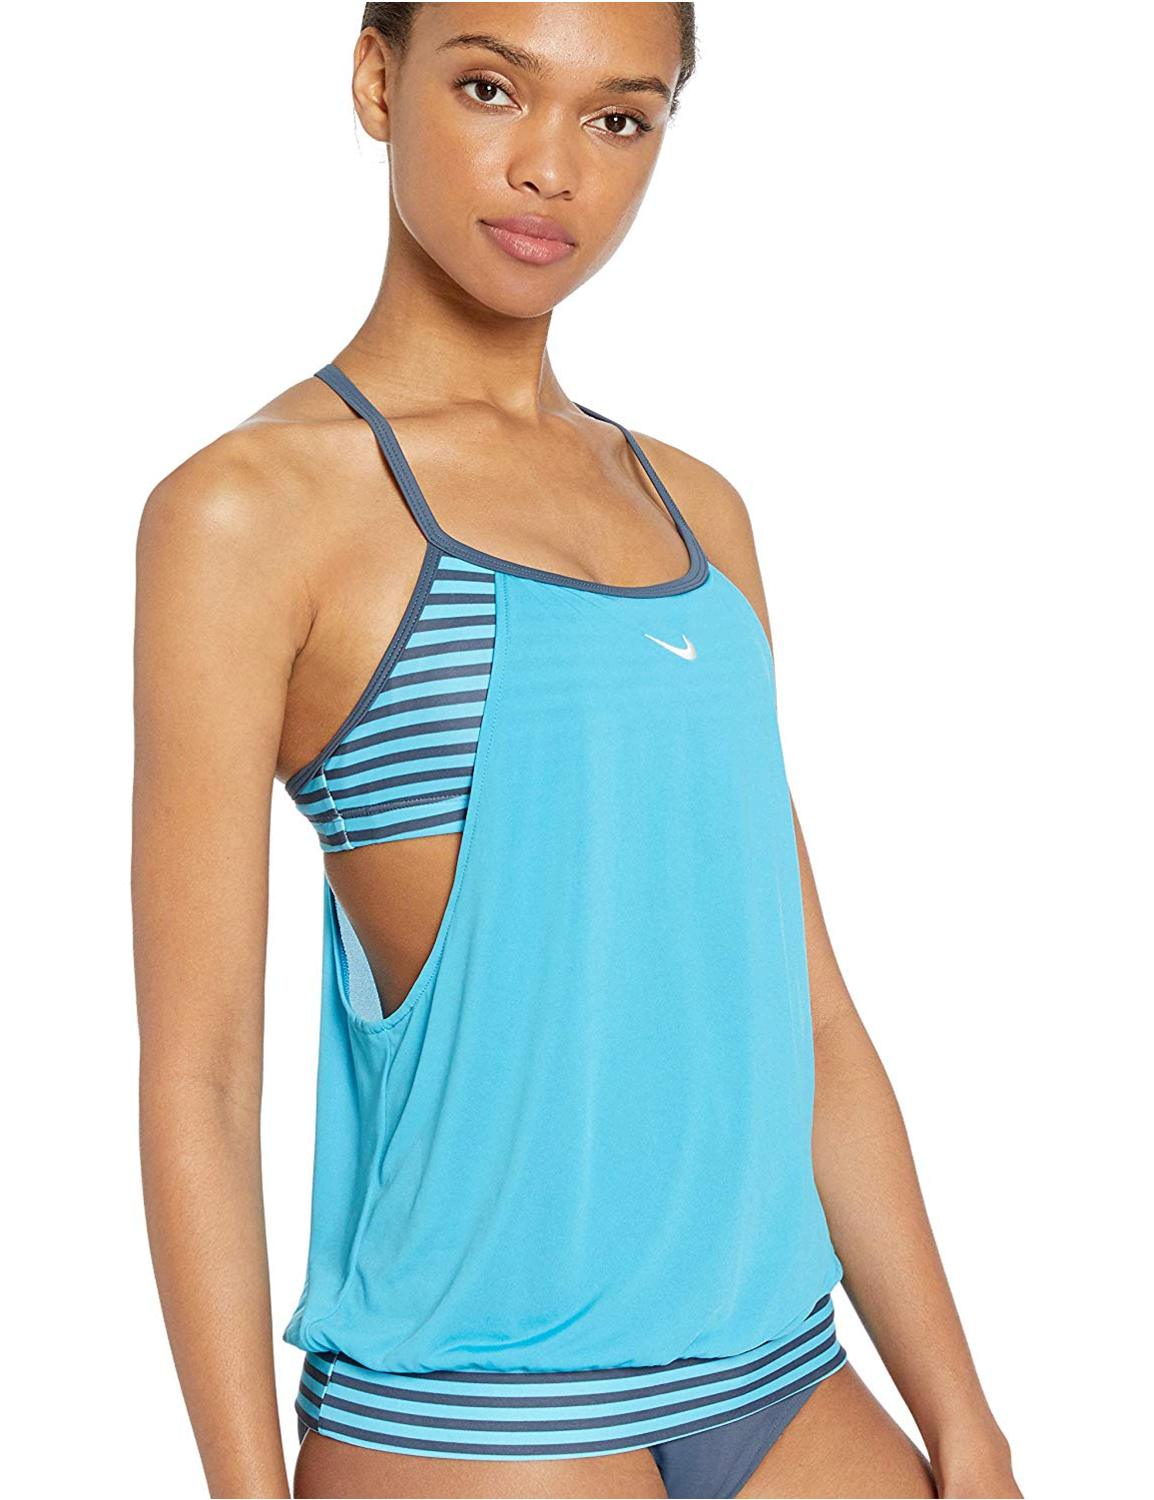 Nike Swim Women's Layered Sport Tankini Swimsuit Set, Light, Blue, Size ...